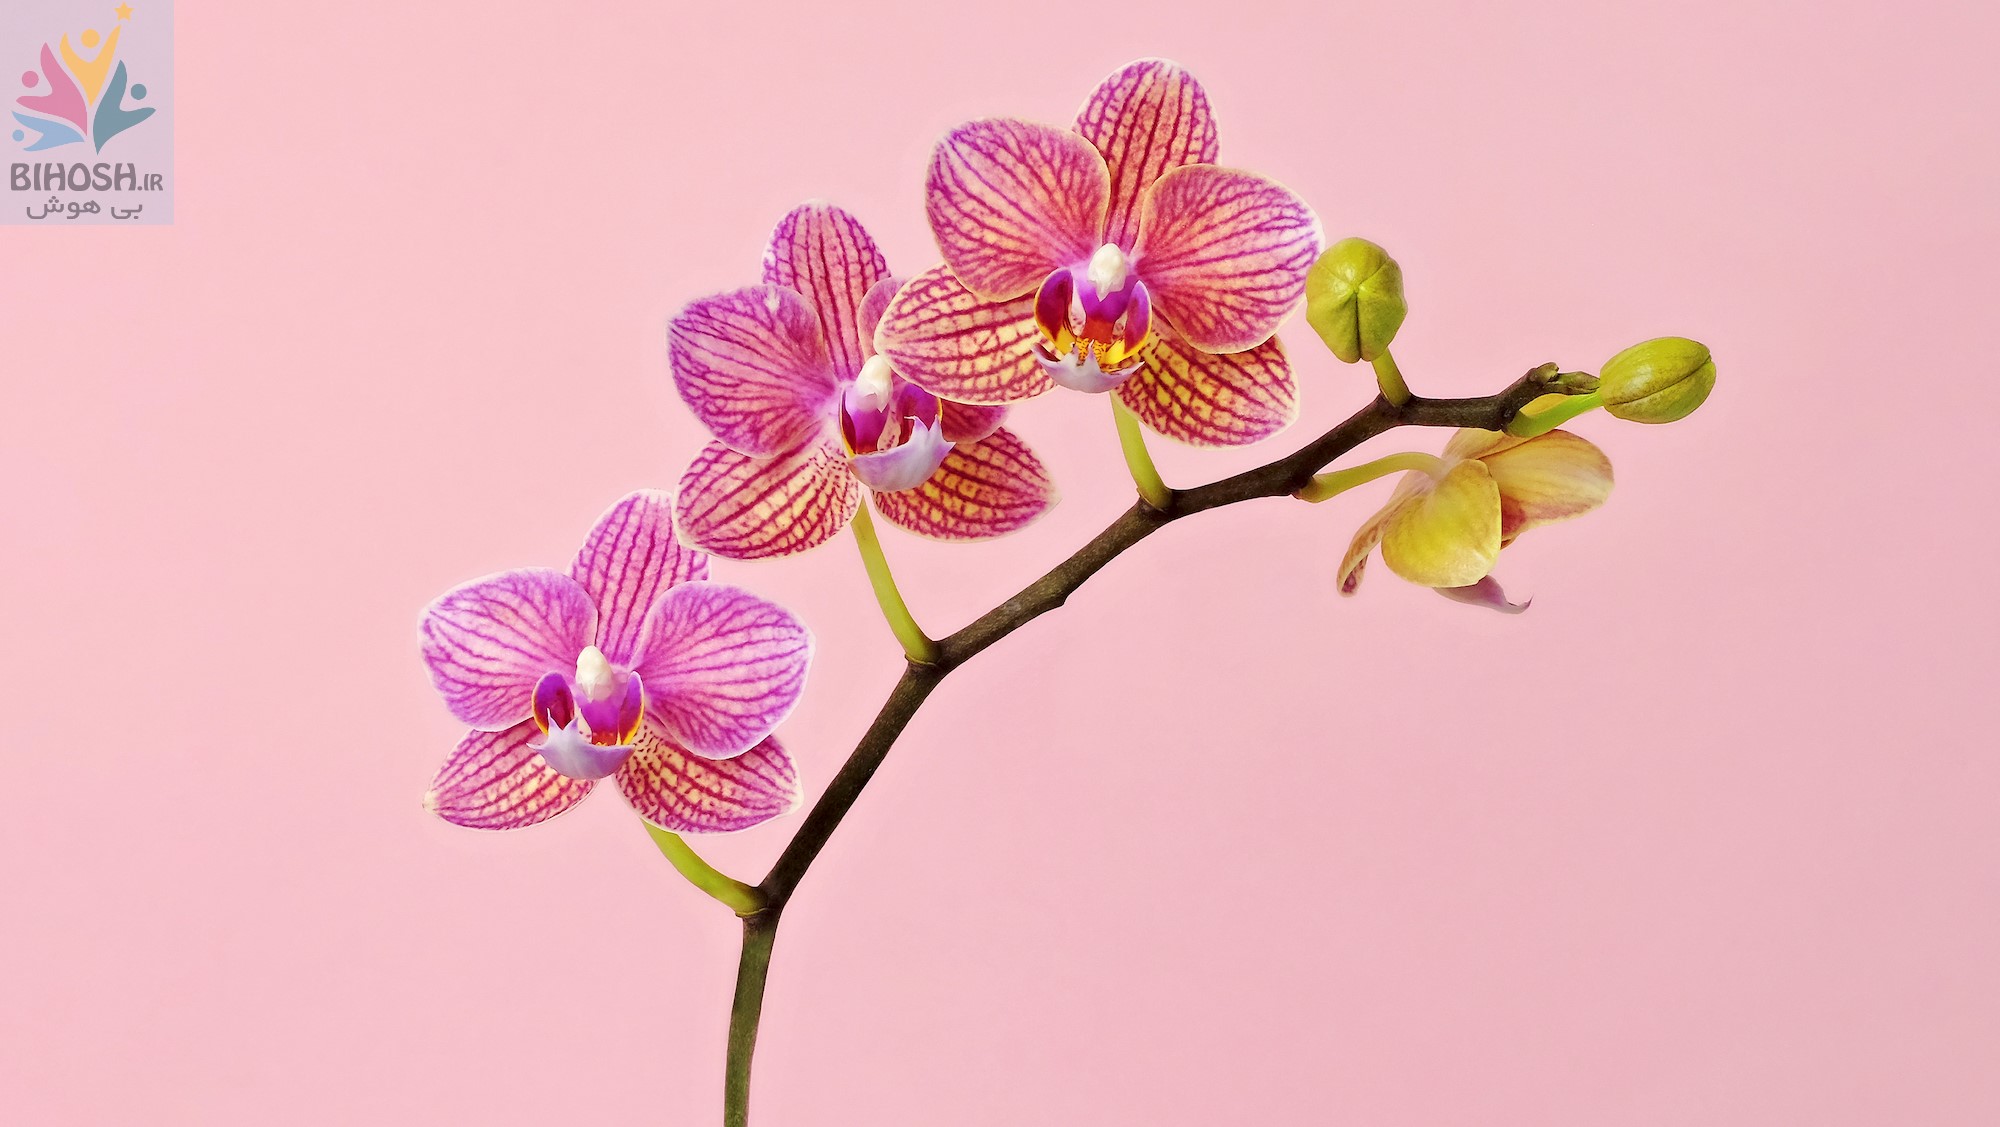 ارکیده (Orchid)